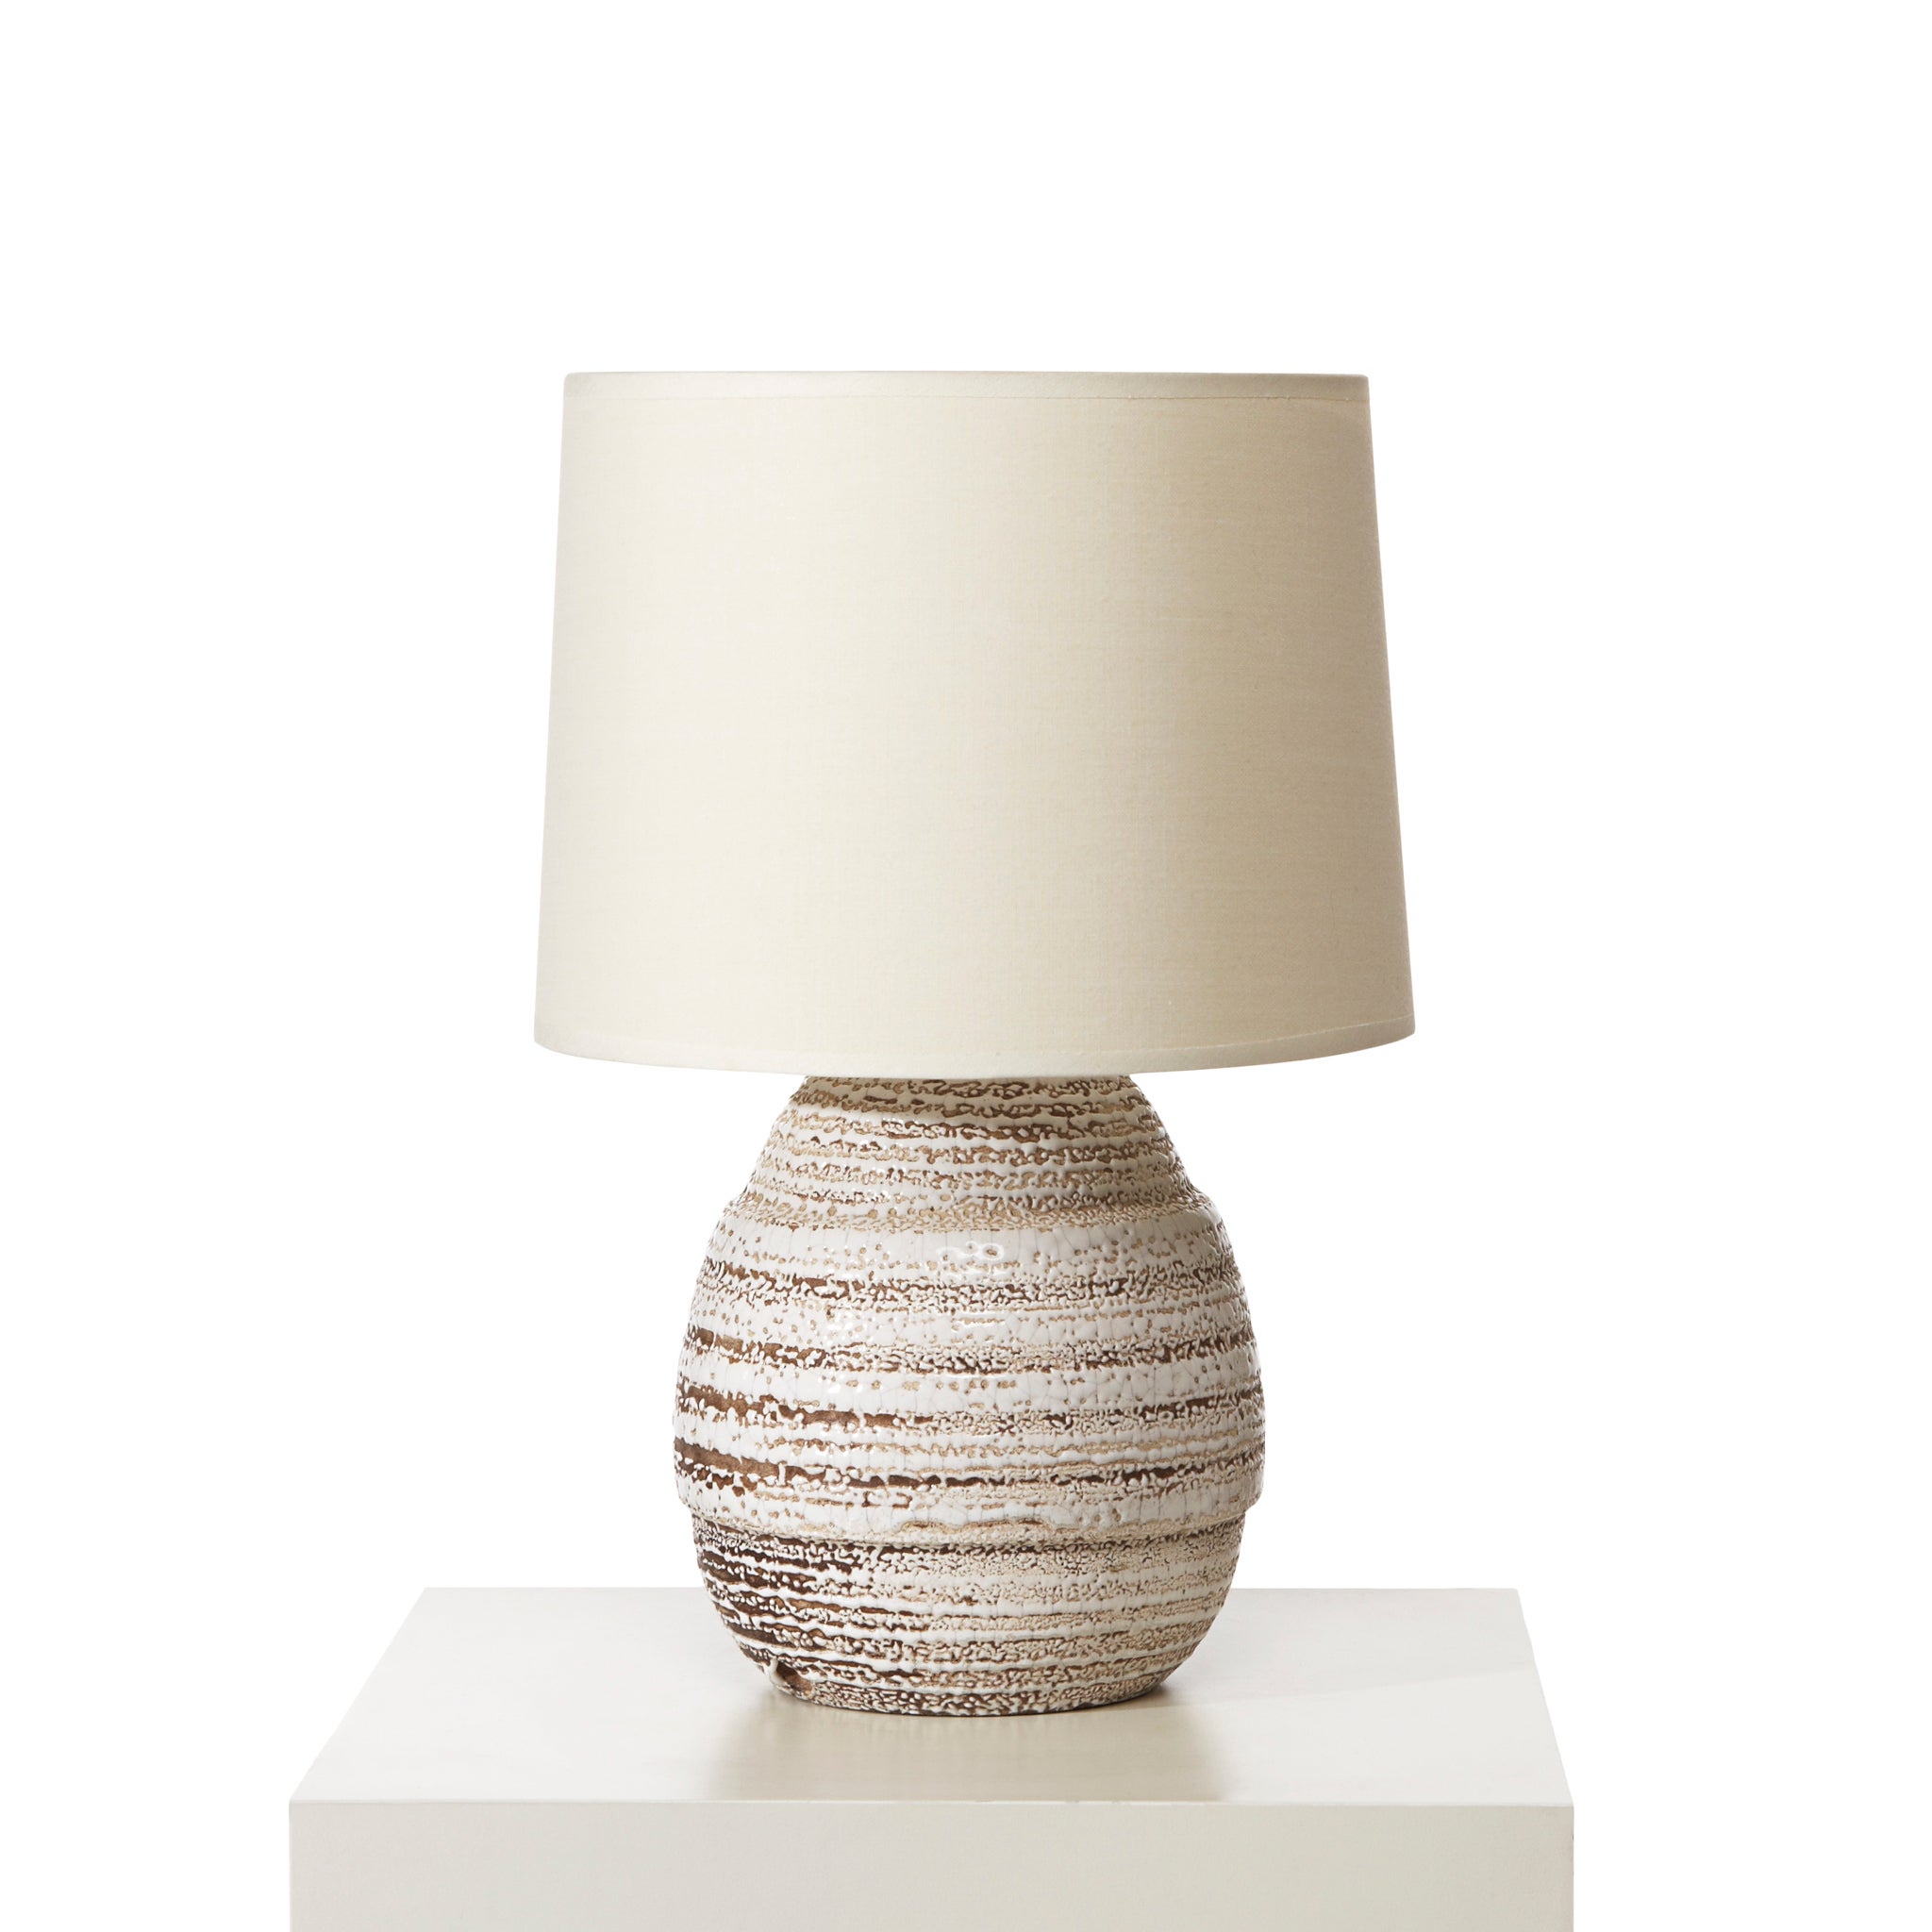 Petite table lamp in ceramic with crispé glaze by Jean Besnard